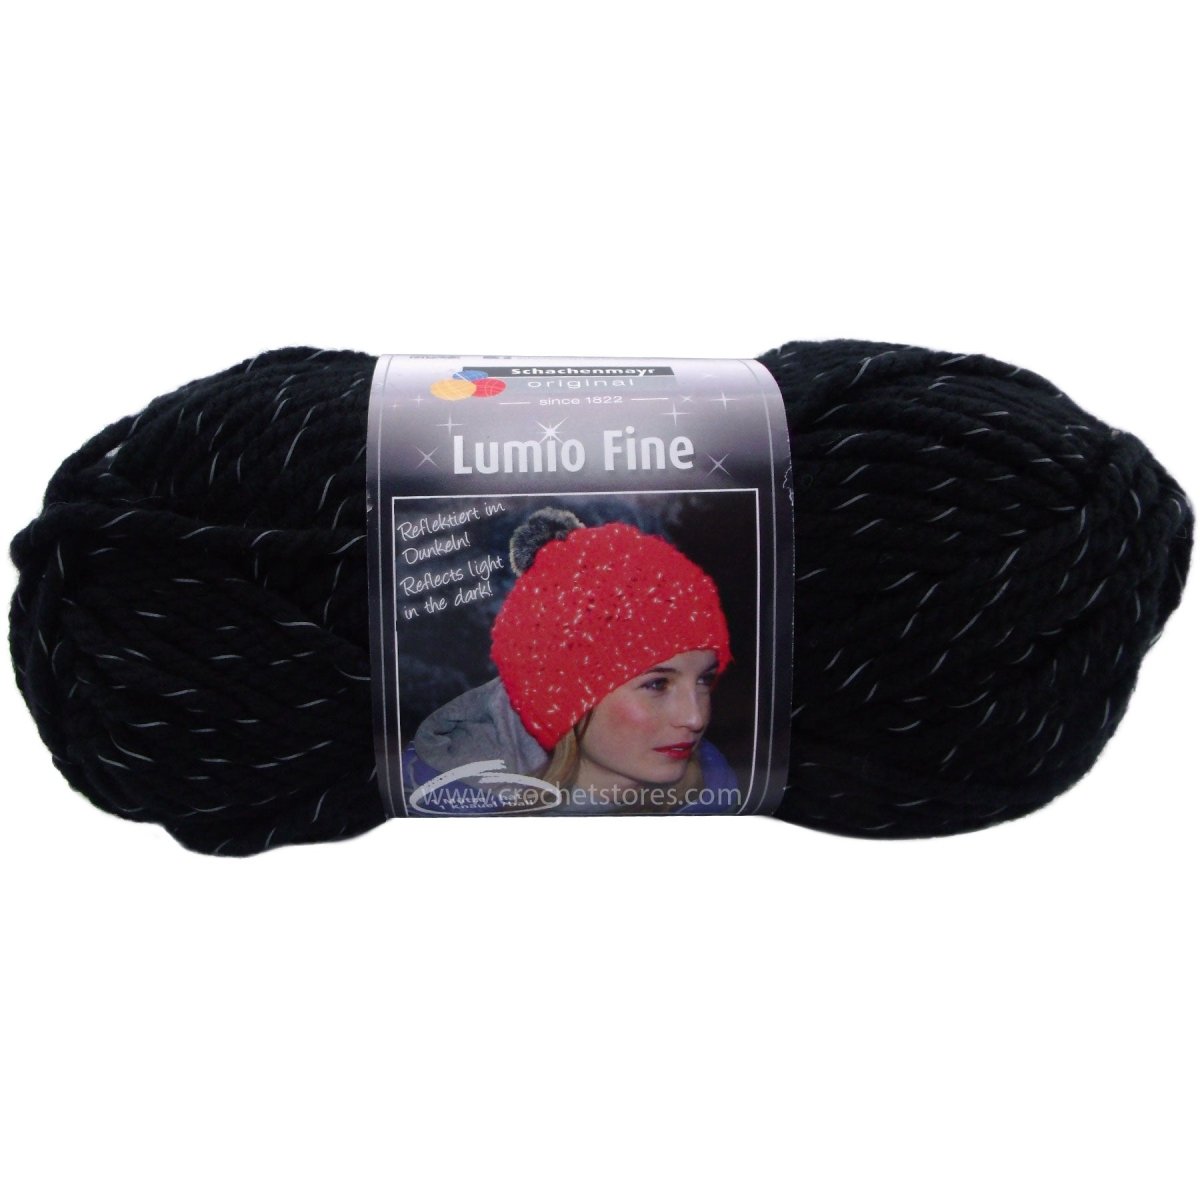 LUMIO FINE - Crochetstores9807557-1994053859047272